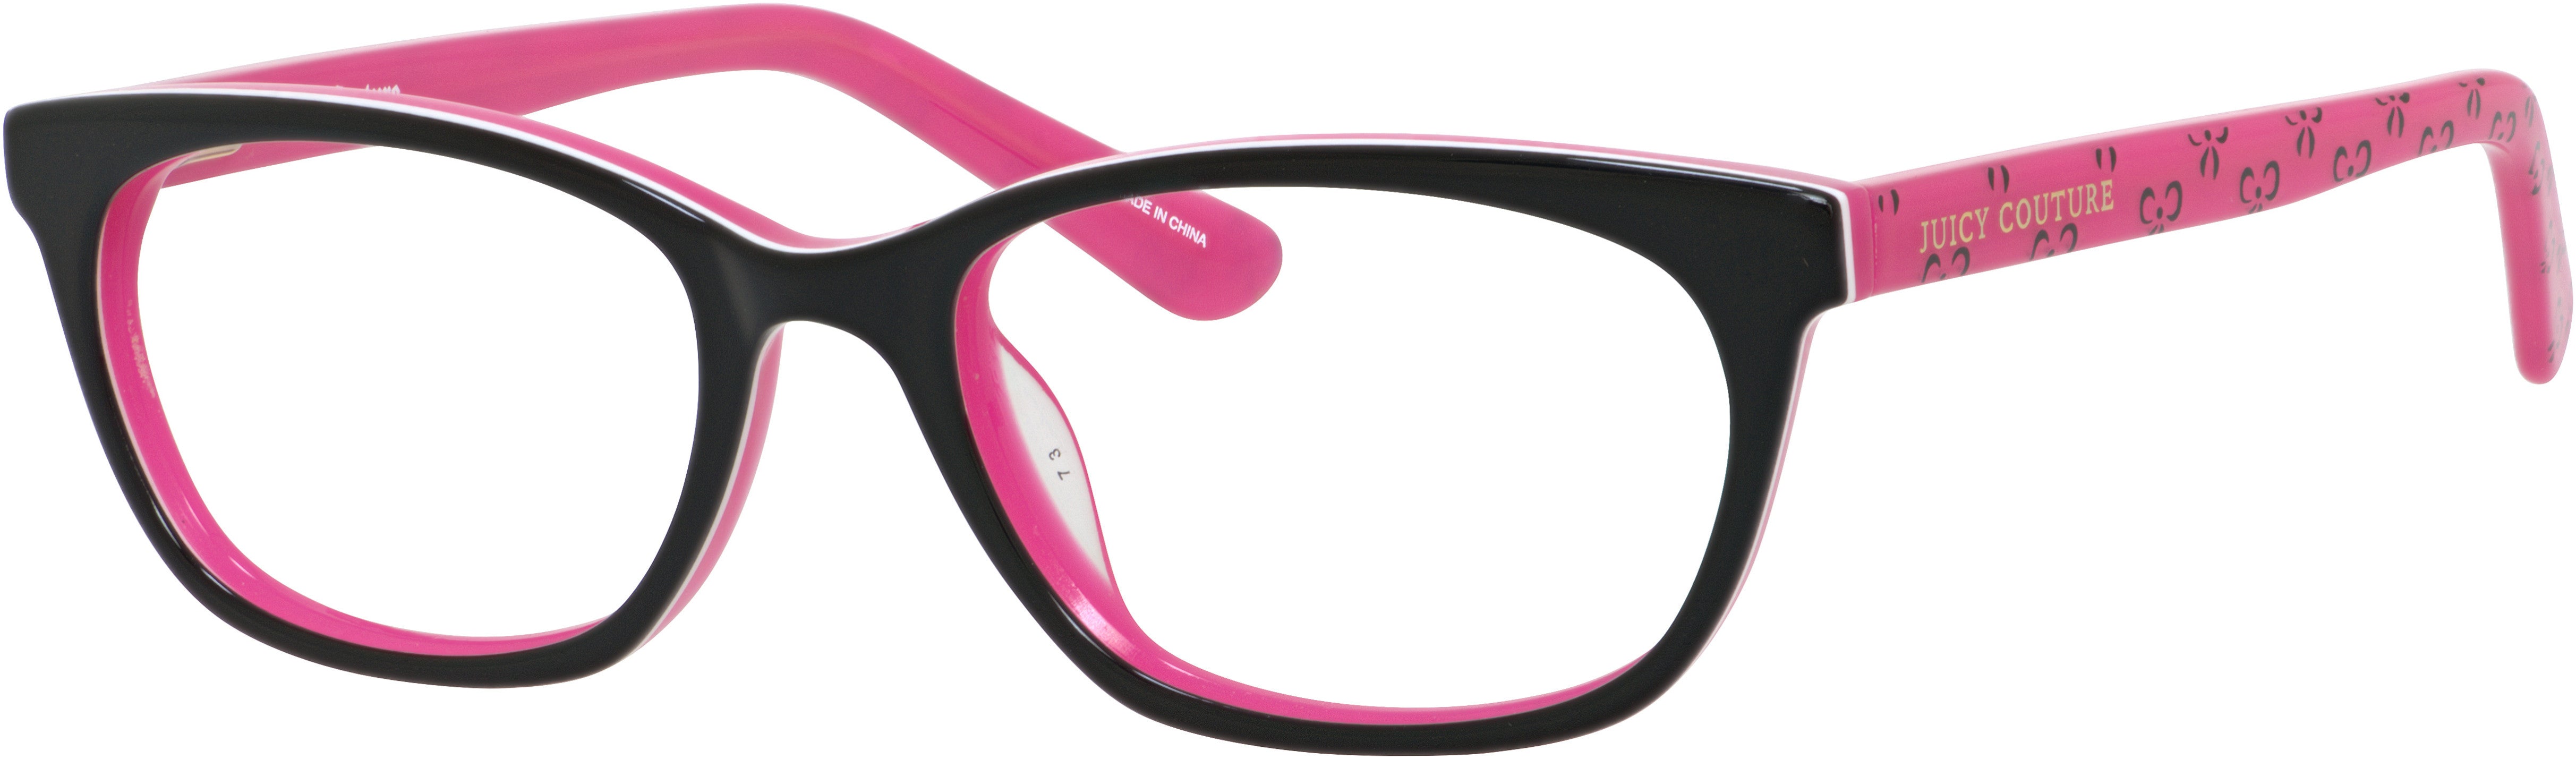 Juicy Couture Juicy 931 Rectangular Eyeglasses 03H2-03H2  Black Pink (00 Demo Lens)